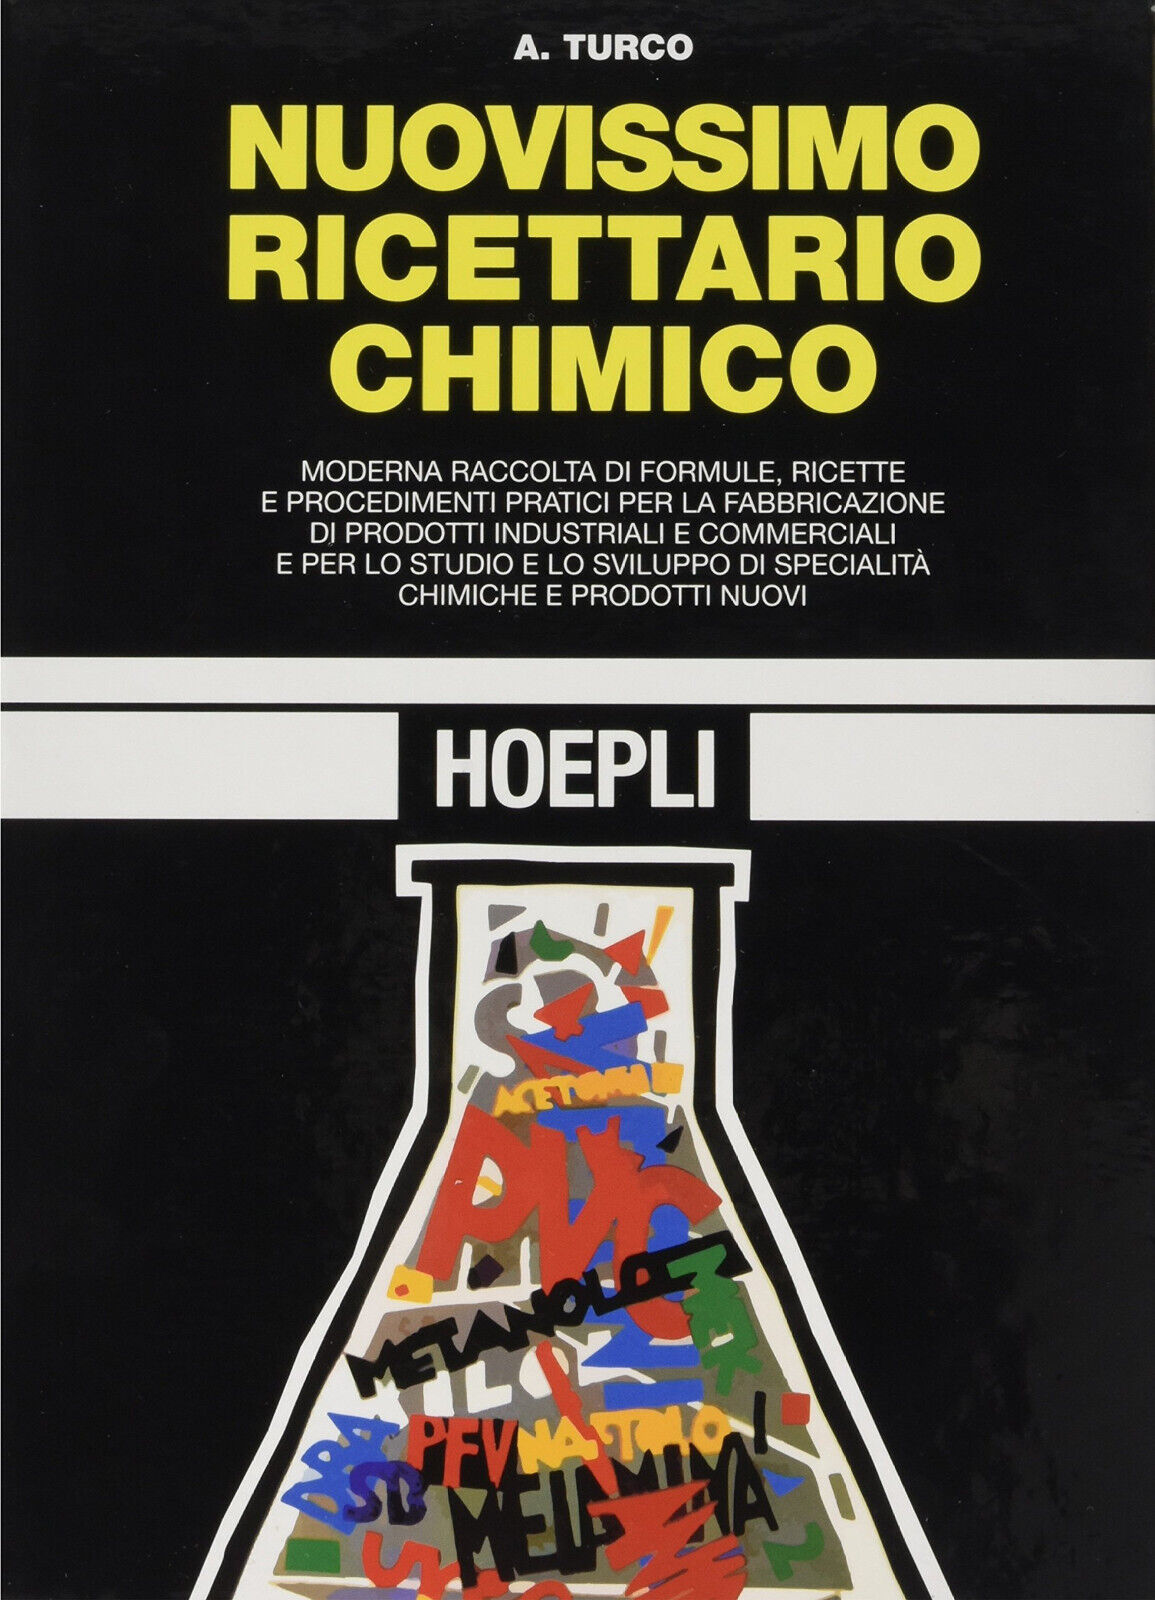 Nuovissimo ricettario chimico - Antonio Turco - Hoepli, 2016